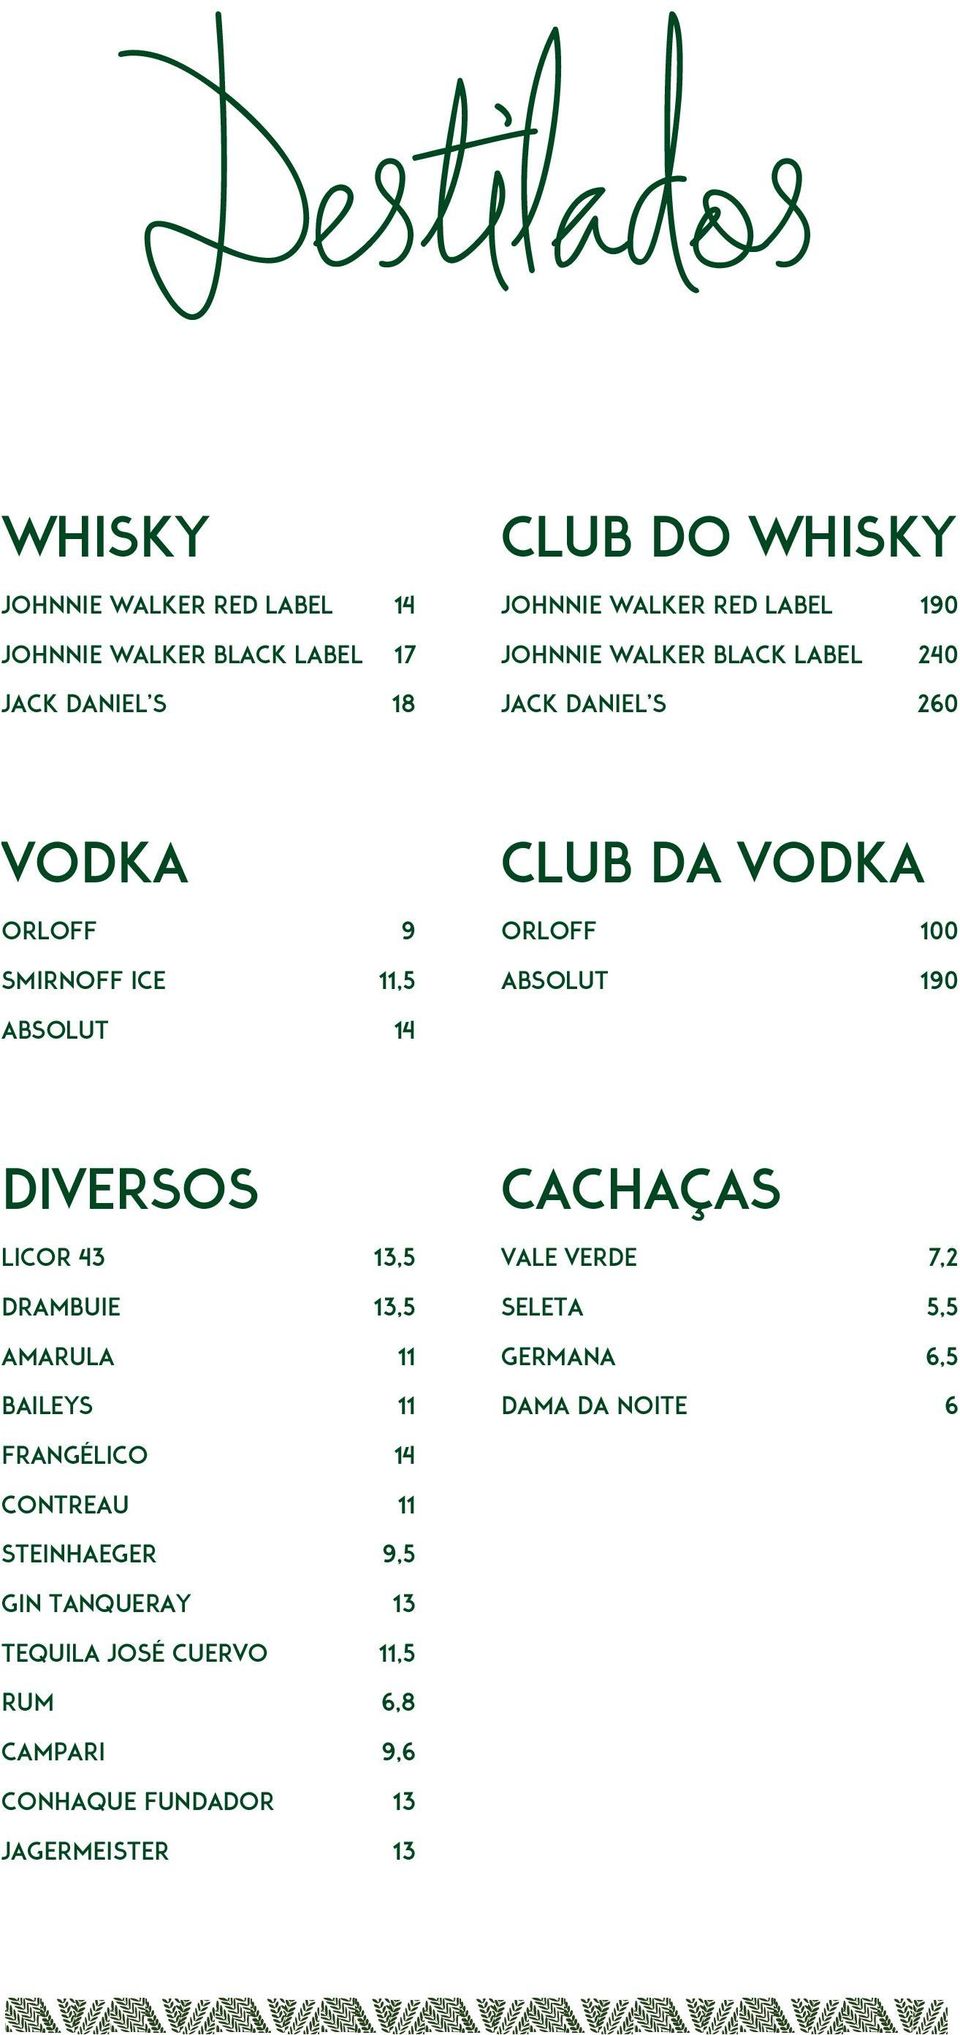 Tequila José Cuervo 11,5 Rum 6,8 Campari 9,6 Conhaque Fundador 13 Jagermeister 13 Club do Whisky Johnnie walker Red Label 190